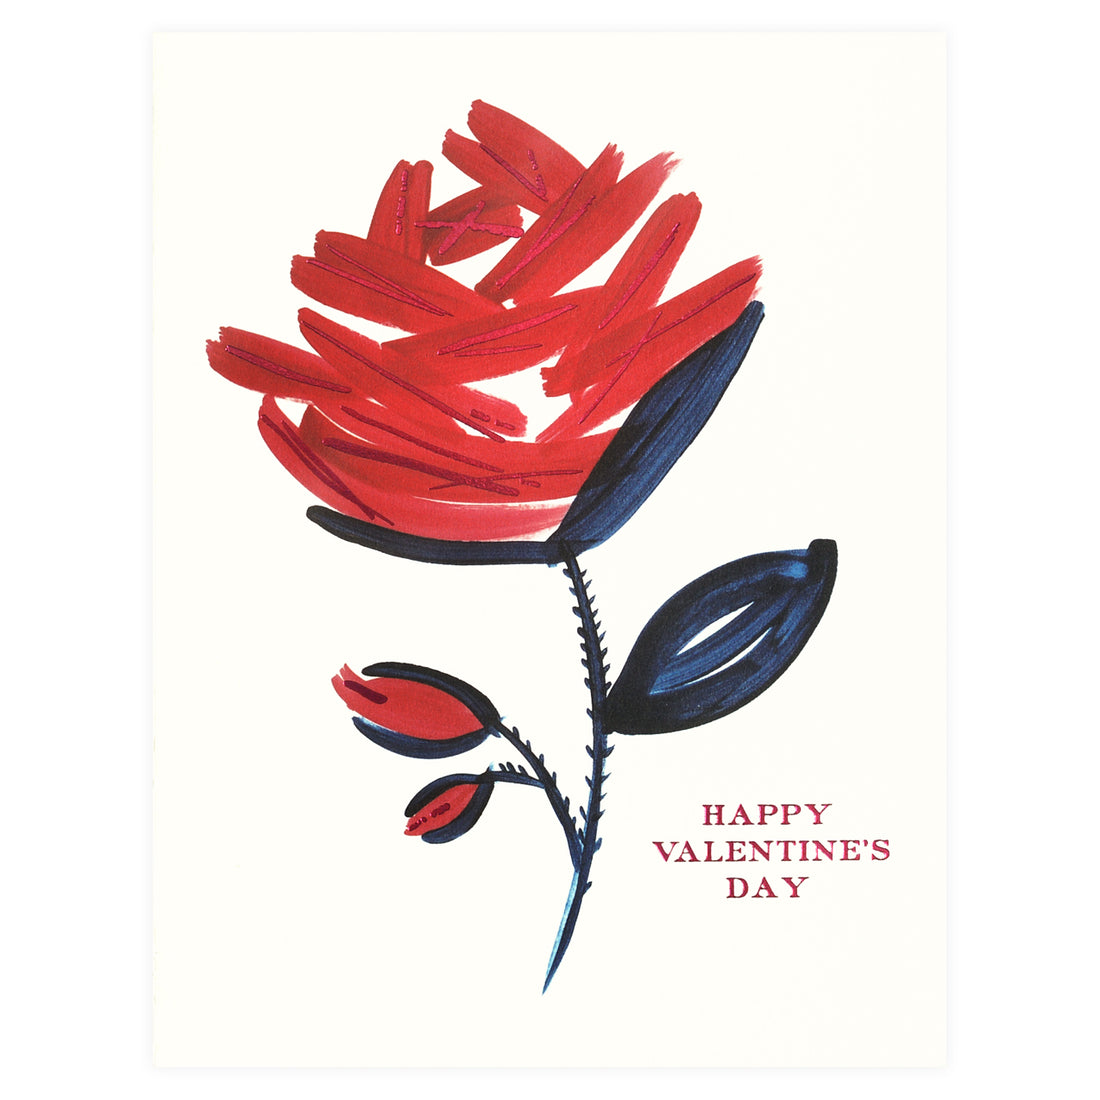 Snow & Graham Valentine Rose Greeting Card 